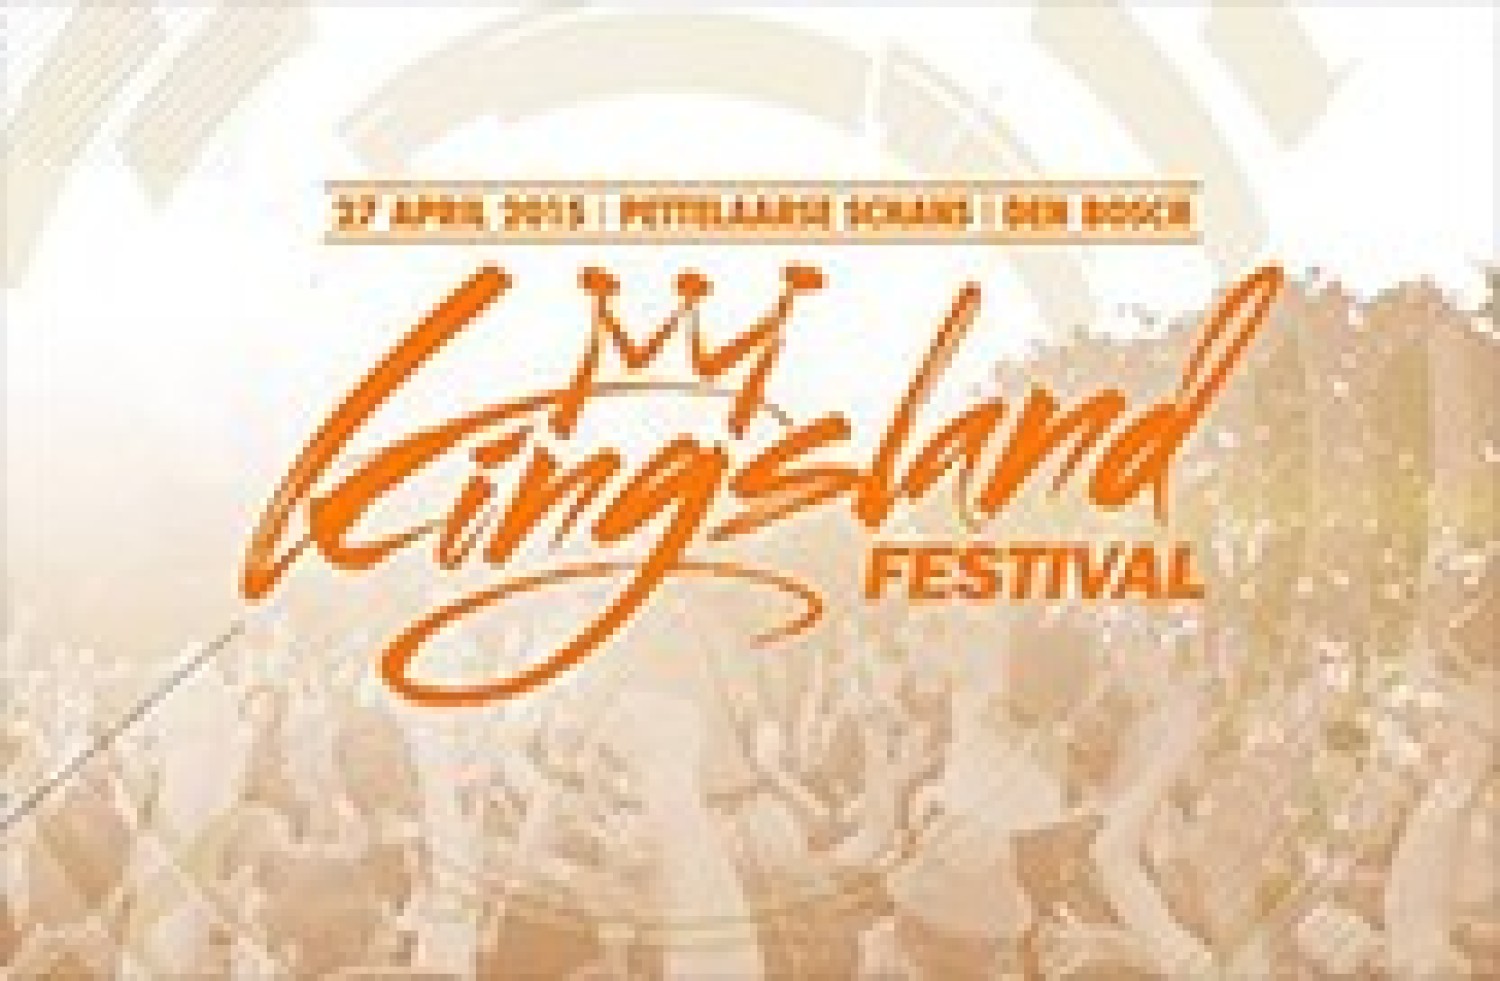 Party report: Kingsland Festival, Den Bosch (27-04-2015)